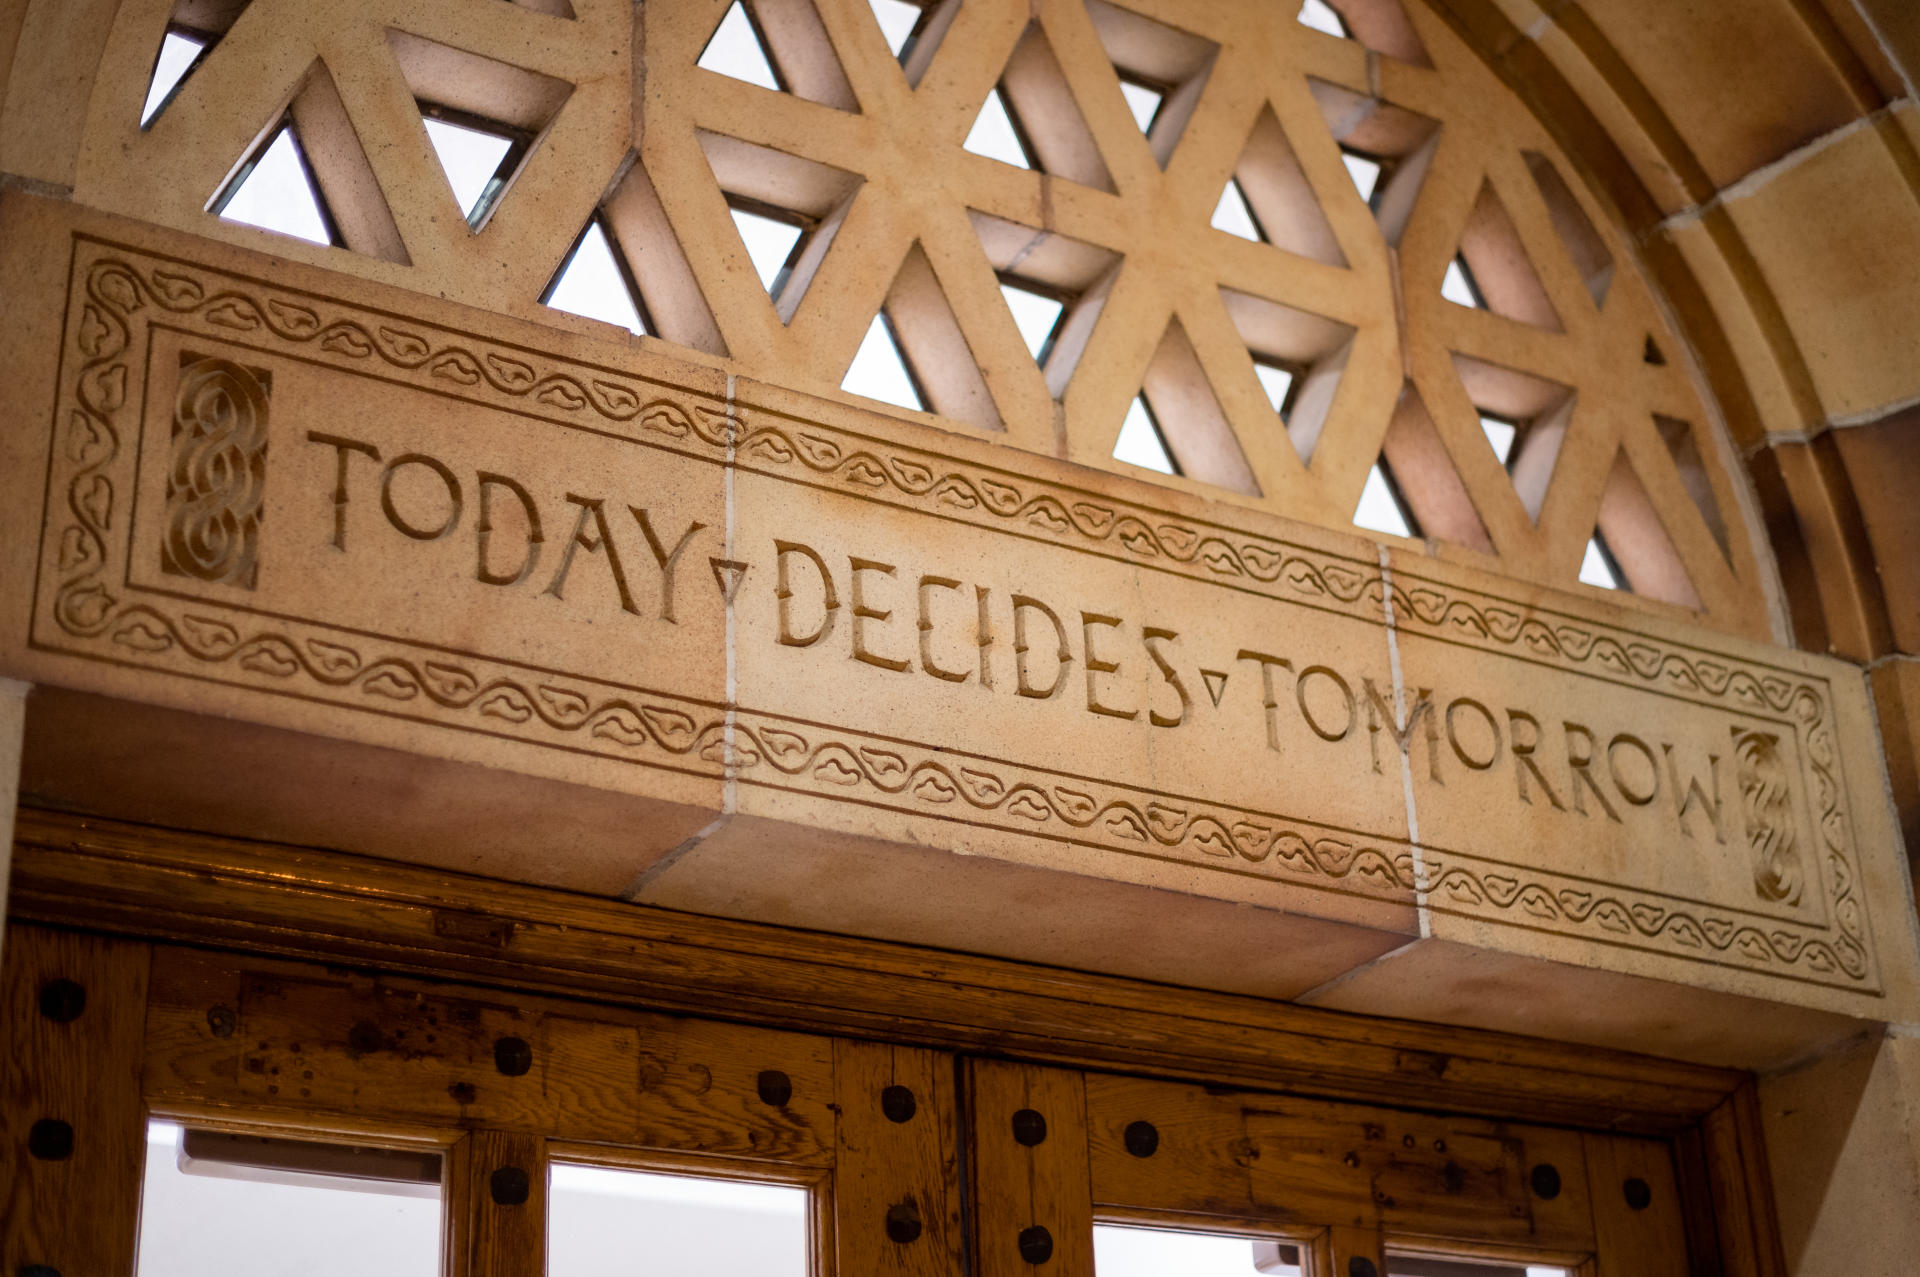 Kendall Hall inscription - "Today Decides Tomorrow"